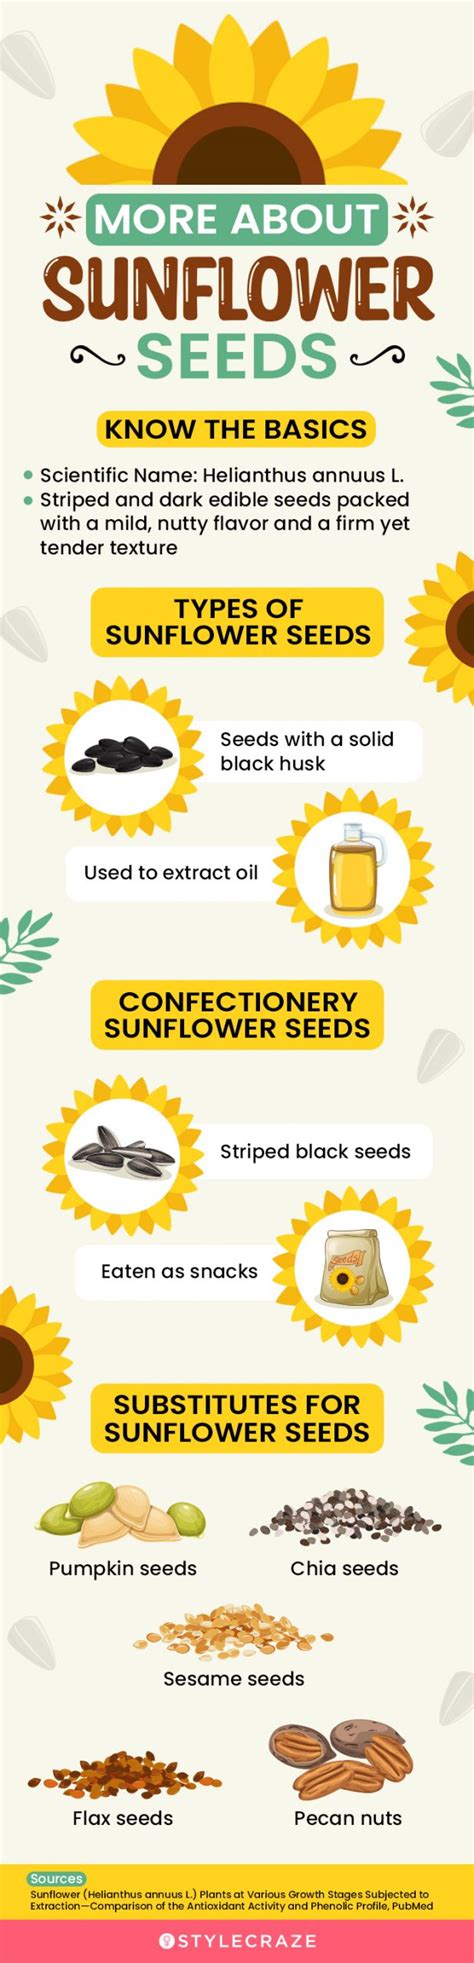 Are sunflower seeds gluten free